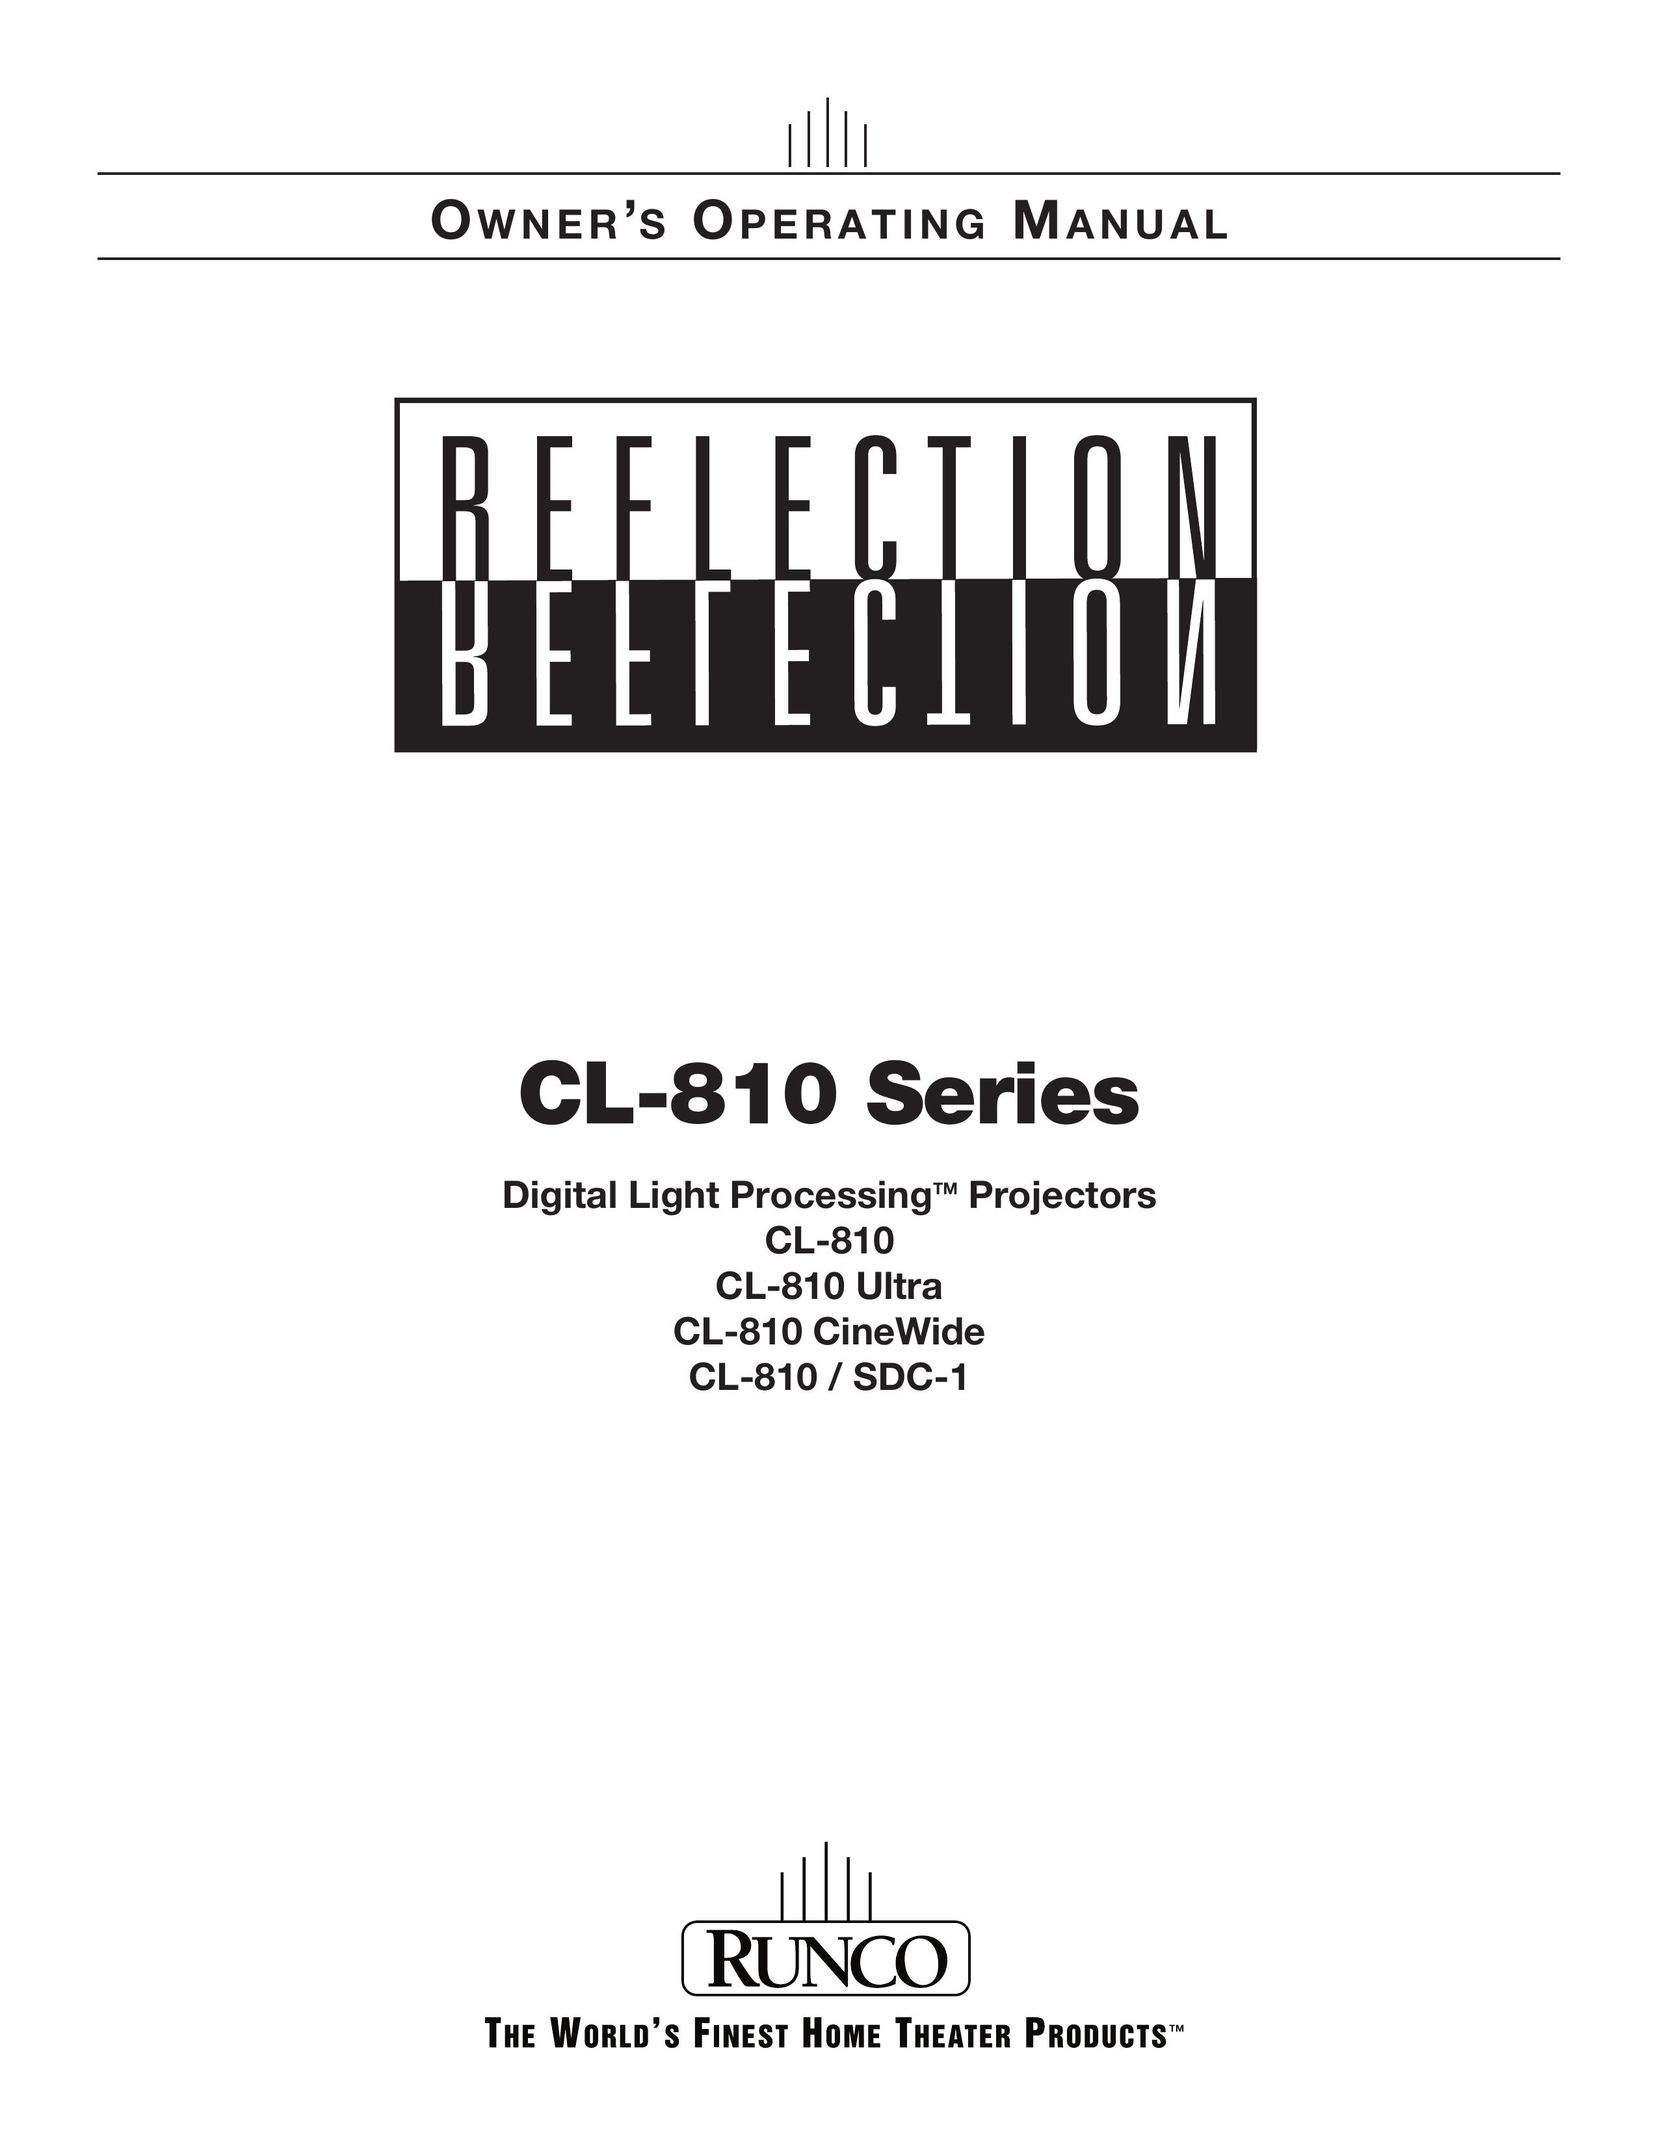 Runco CL-810 / SDC-1 Projector User Manual